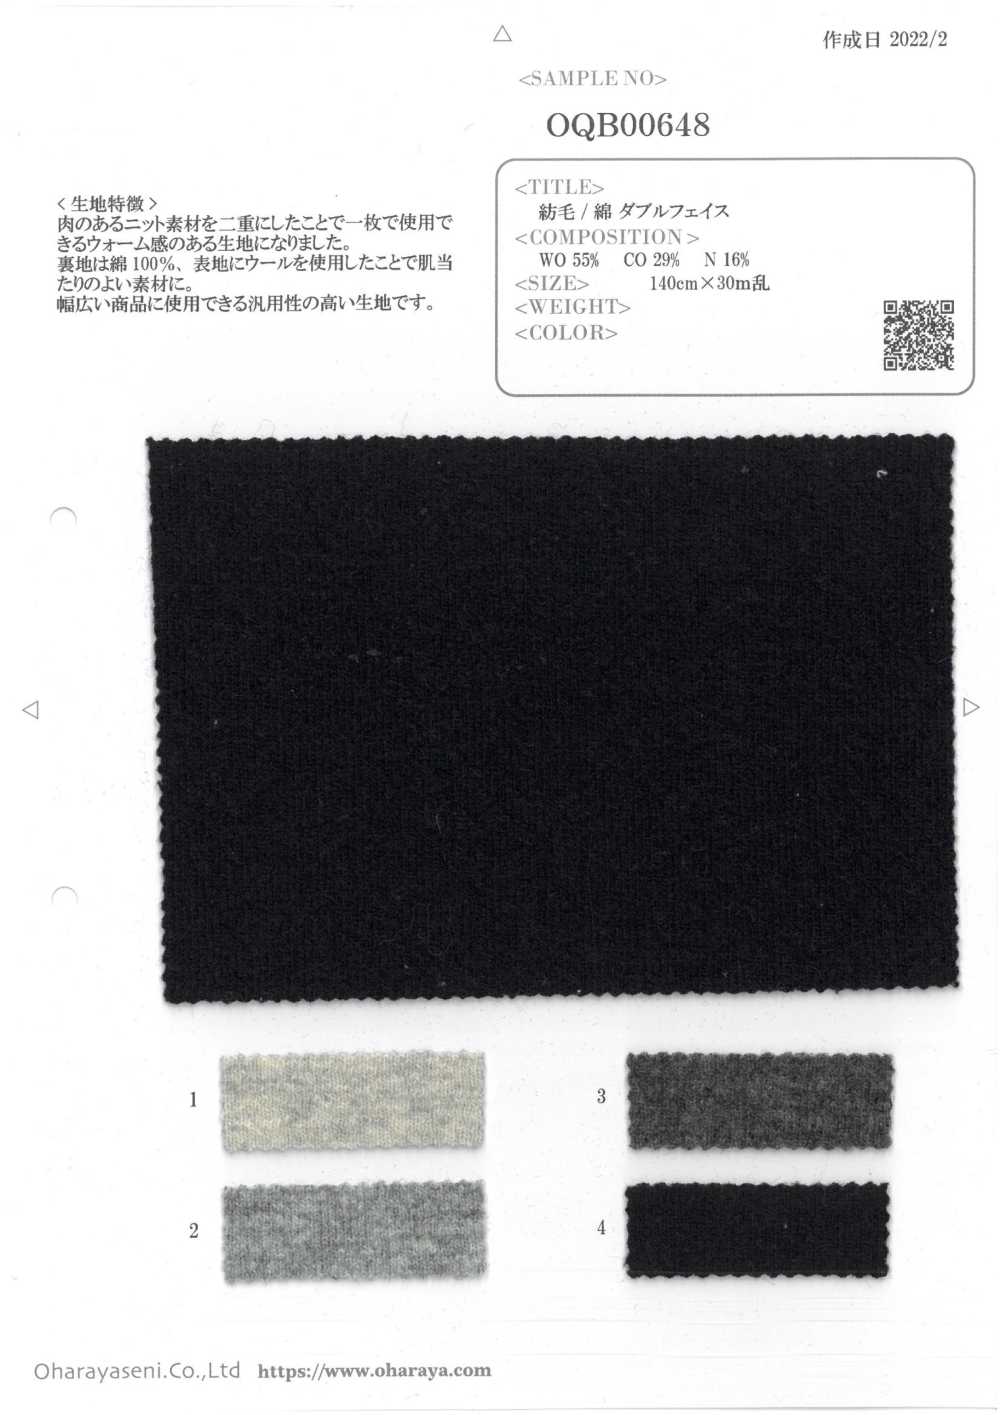 OQB00648 Woolen/cotton Double Face[Textile / Fabric] Oharayaseni